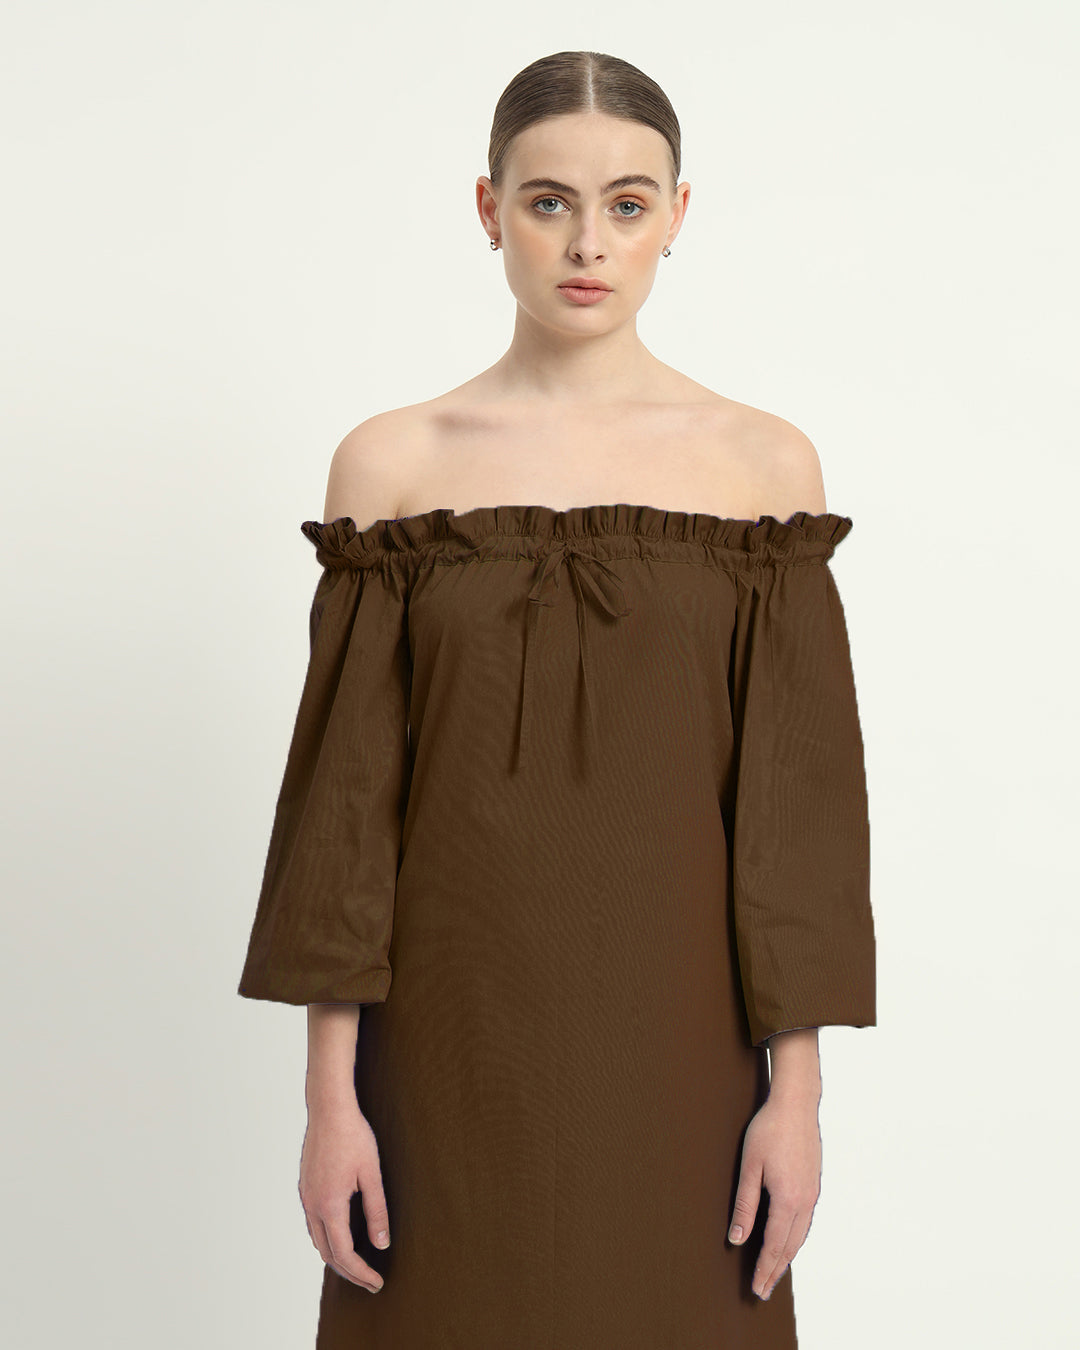 The Carlisle Nutshell Cotton Dress